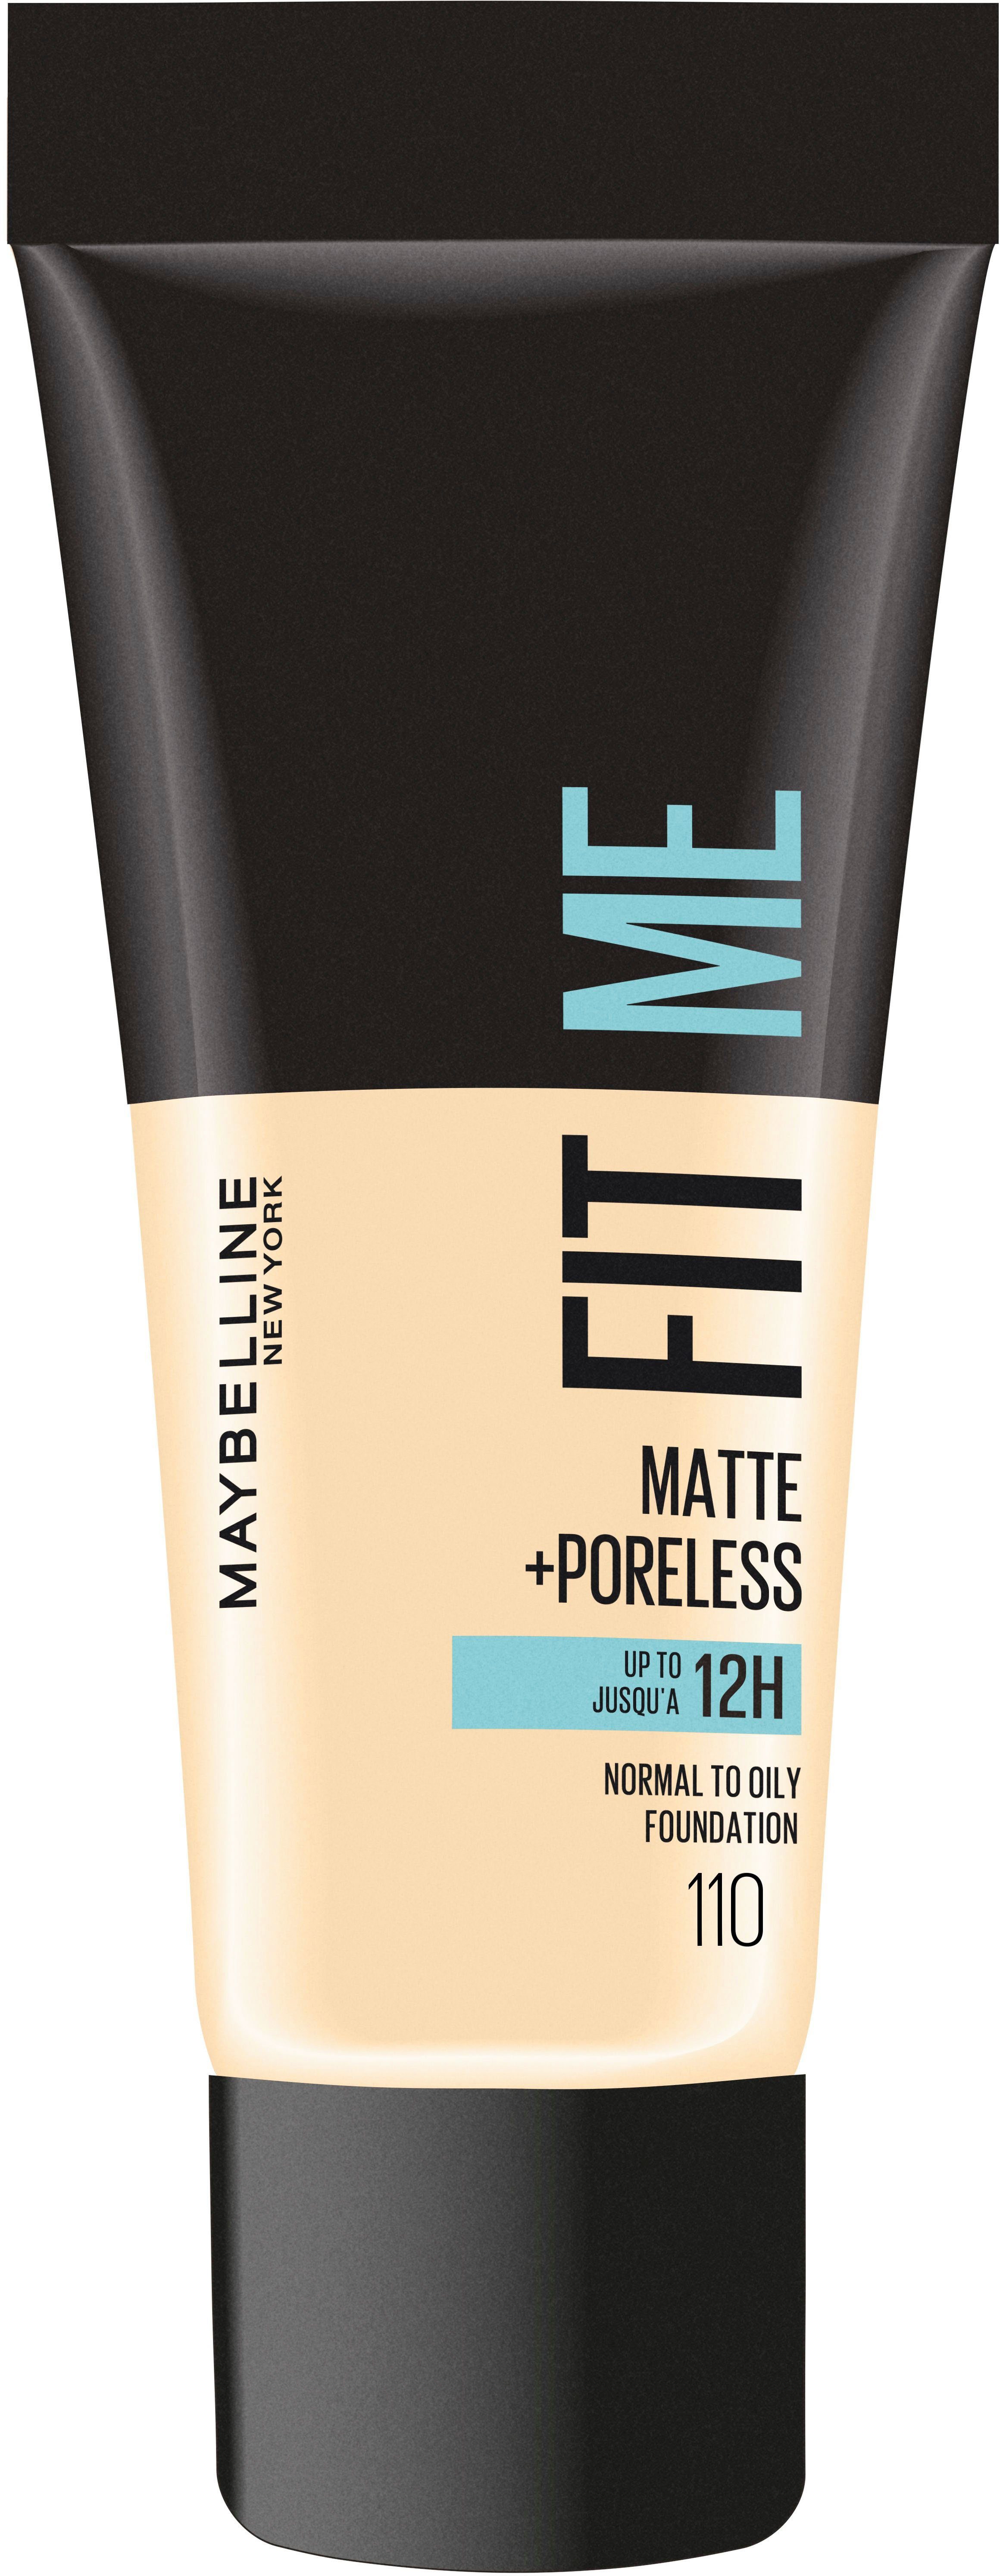 Poreless York Make-Up New Maybelline Foundation + YORK NEW Matte Me! MAYBELLINE Fit